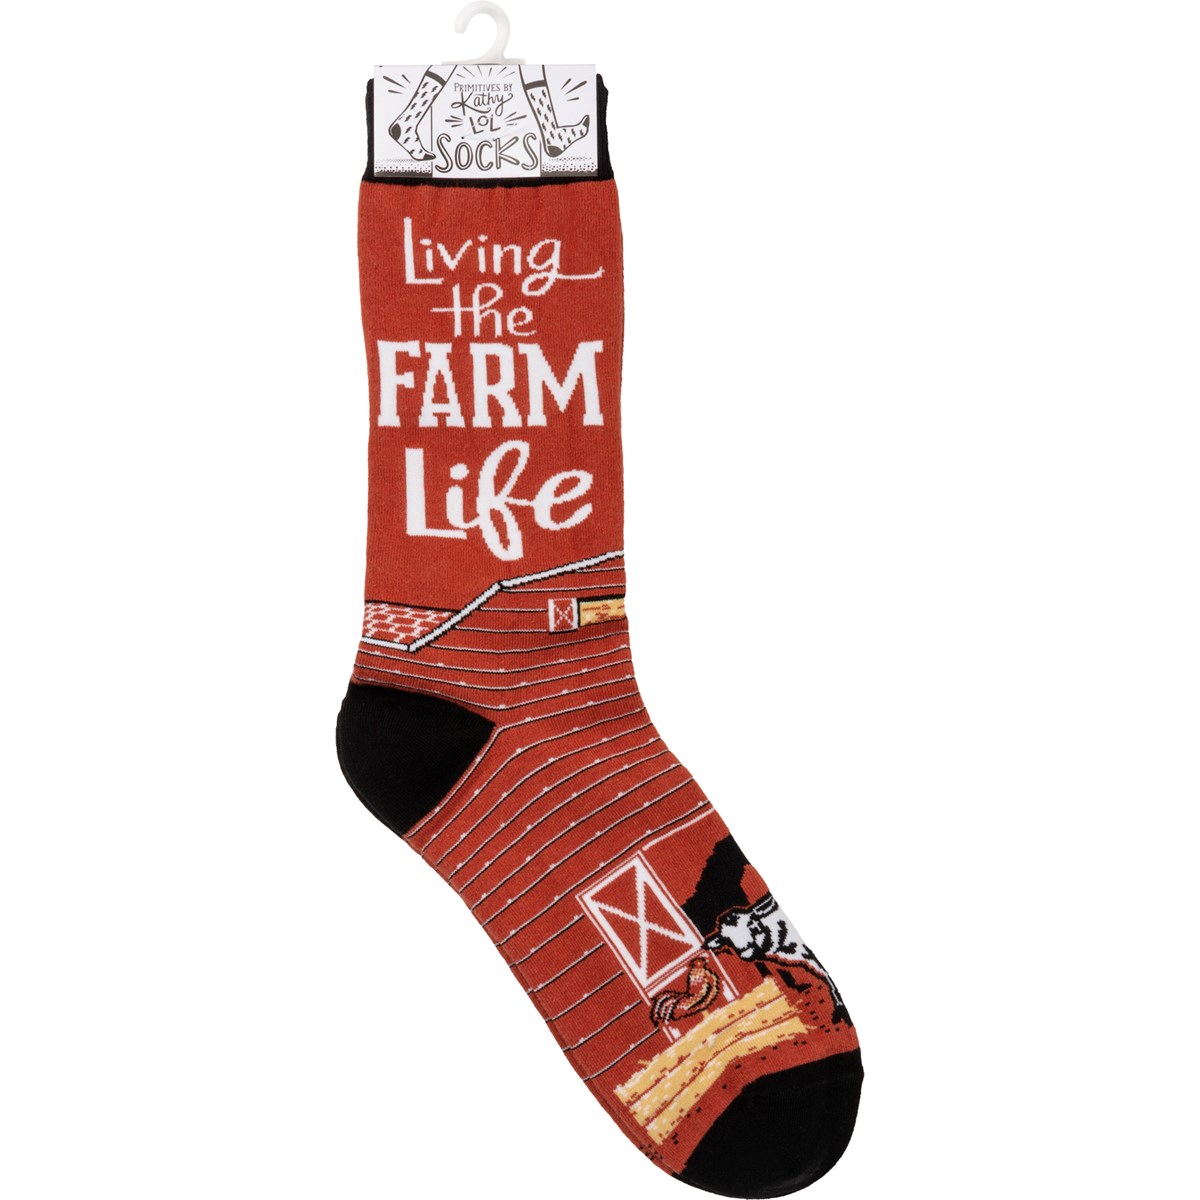 Living The Farm Life Socks - Cotton, Nylon, Spandex